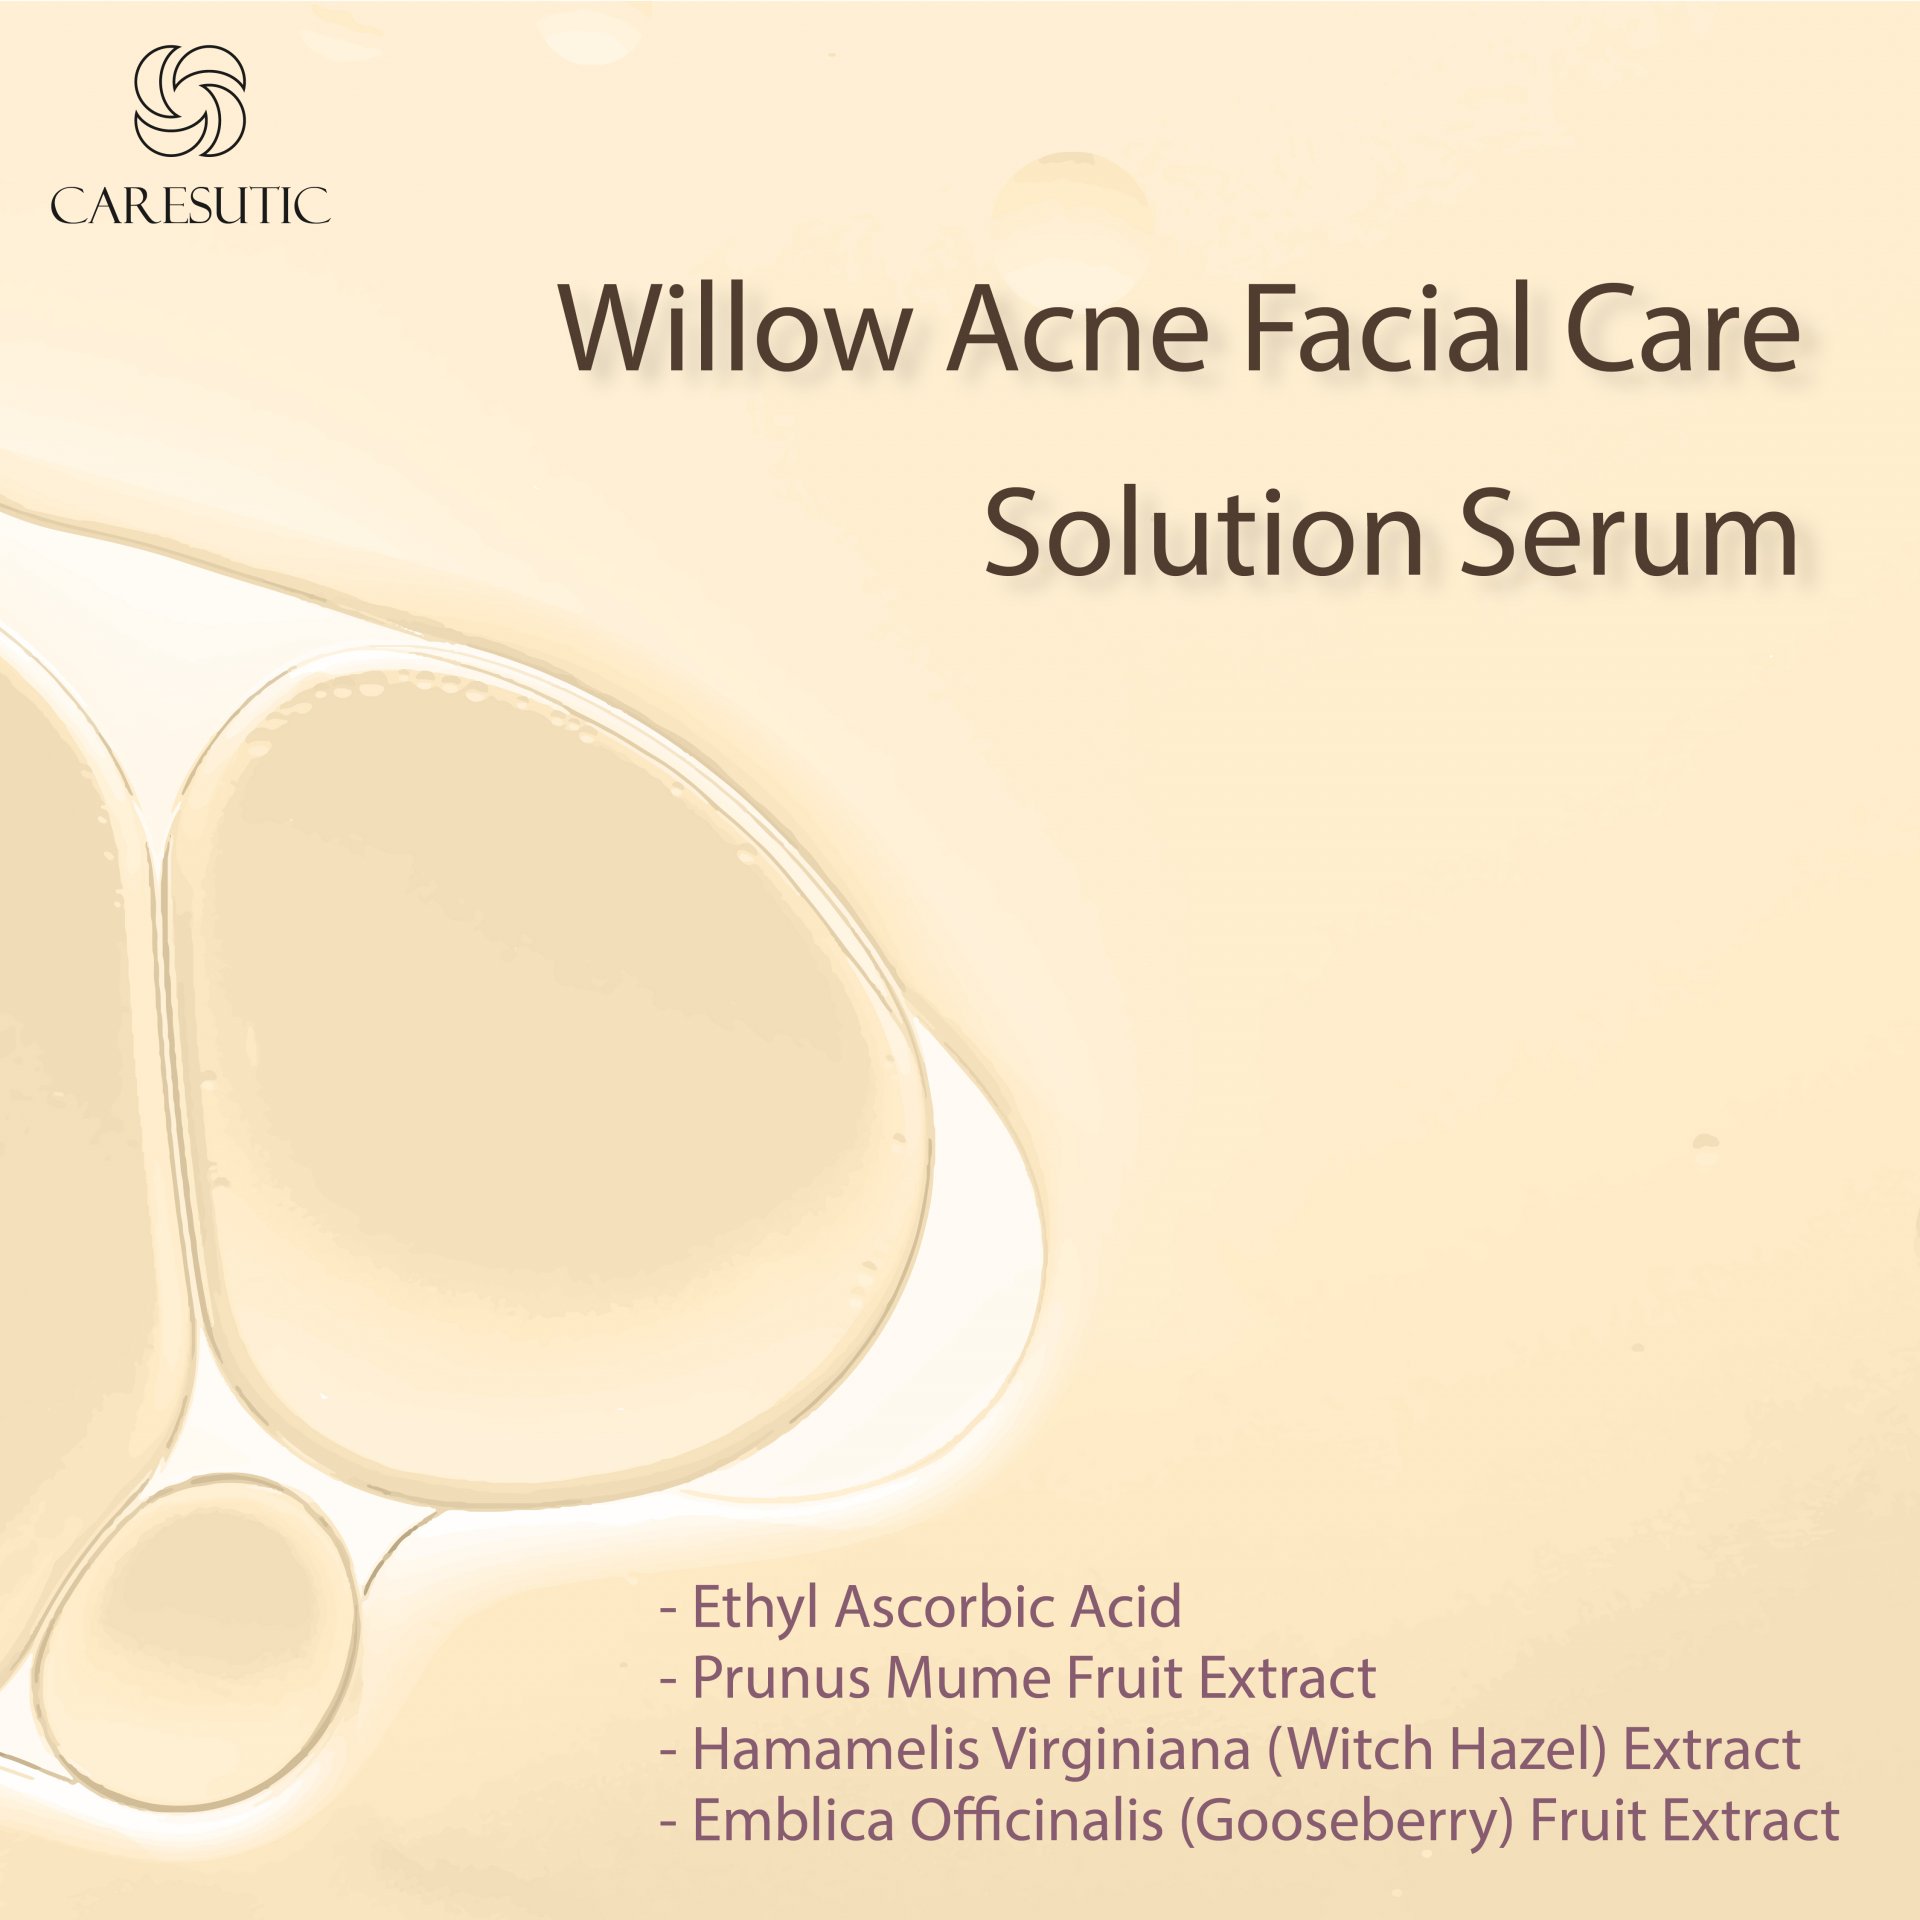 Willow Acne Facial Care Solution Serum